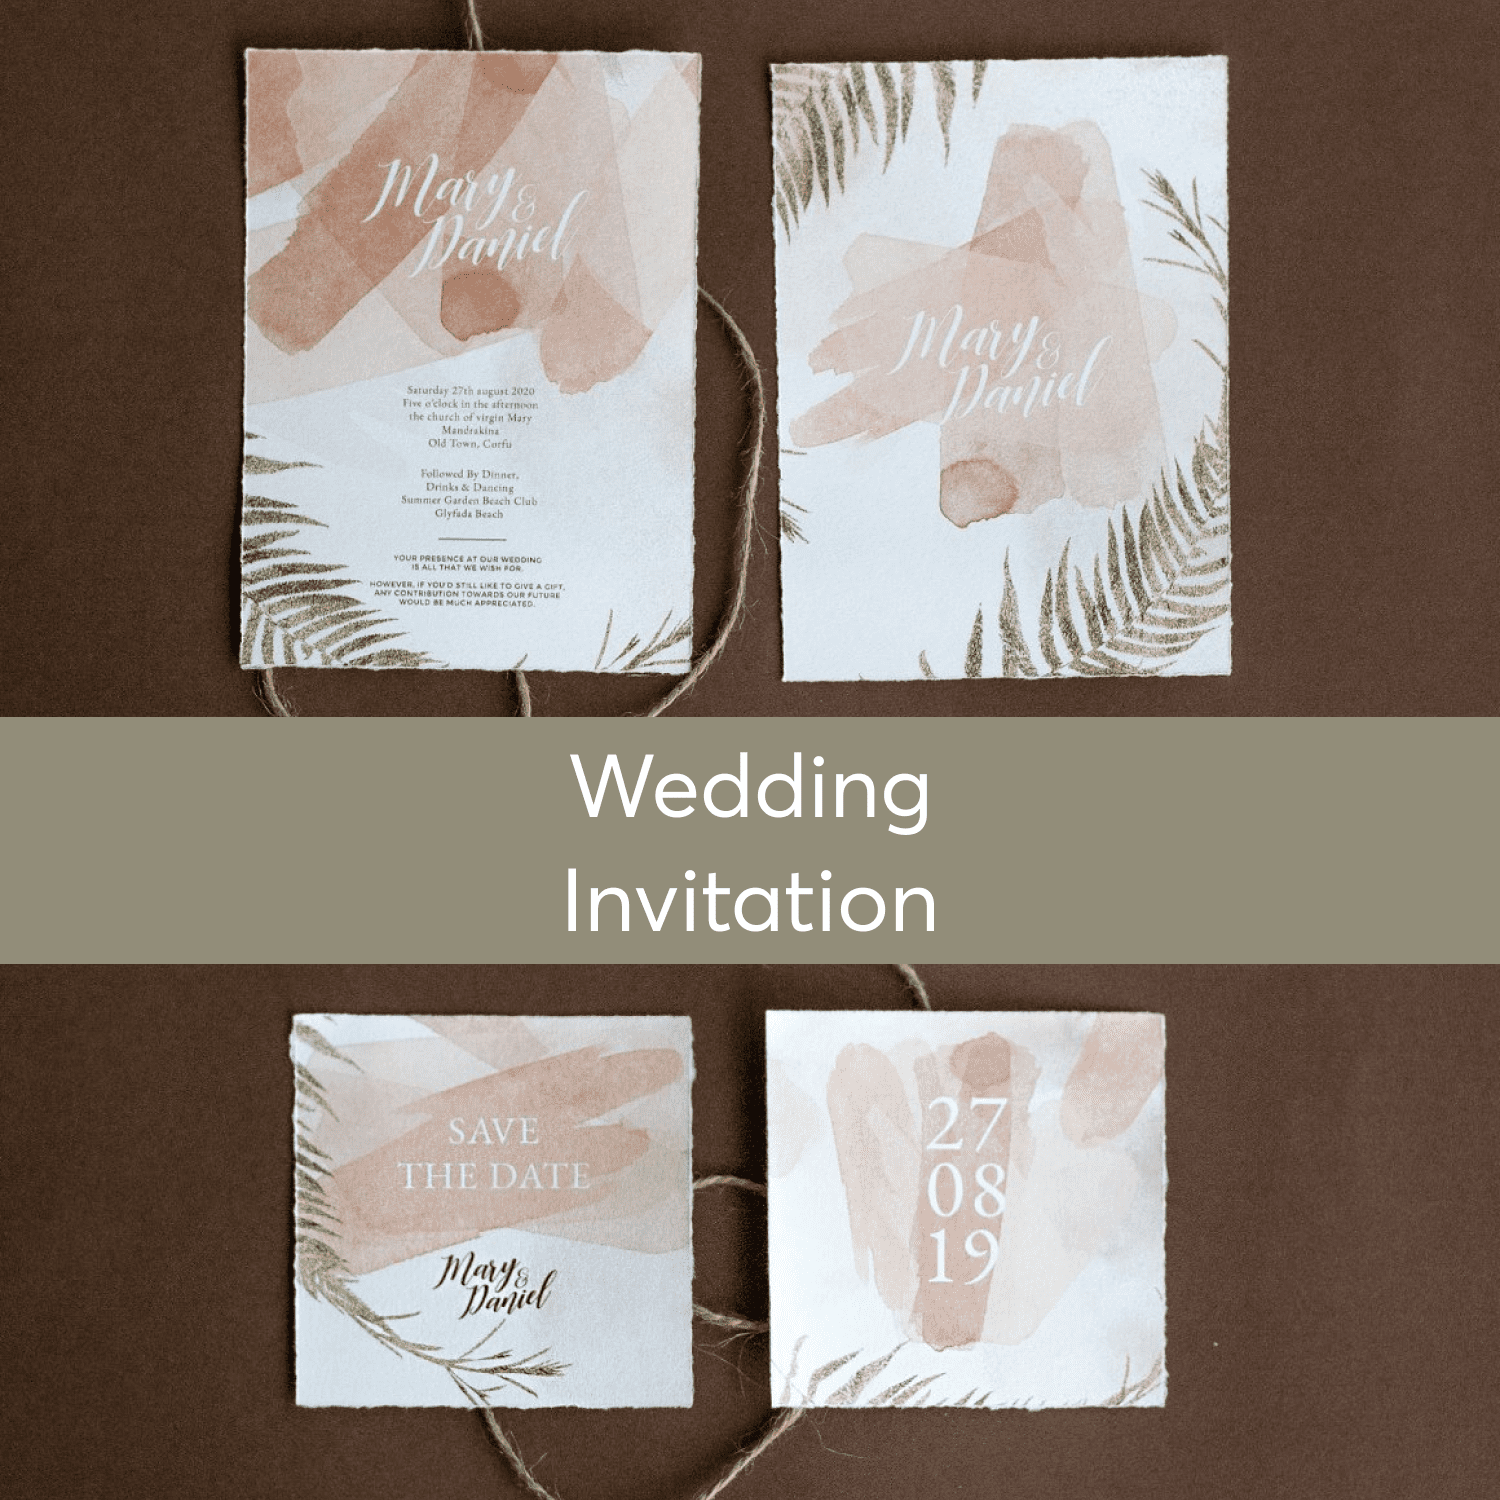 Wedding Invitation preview 1500x1500 1